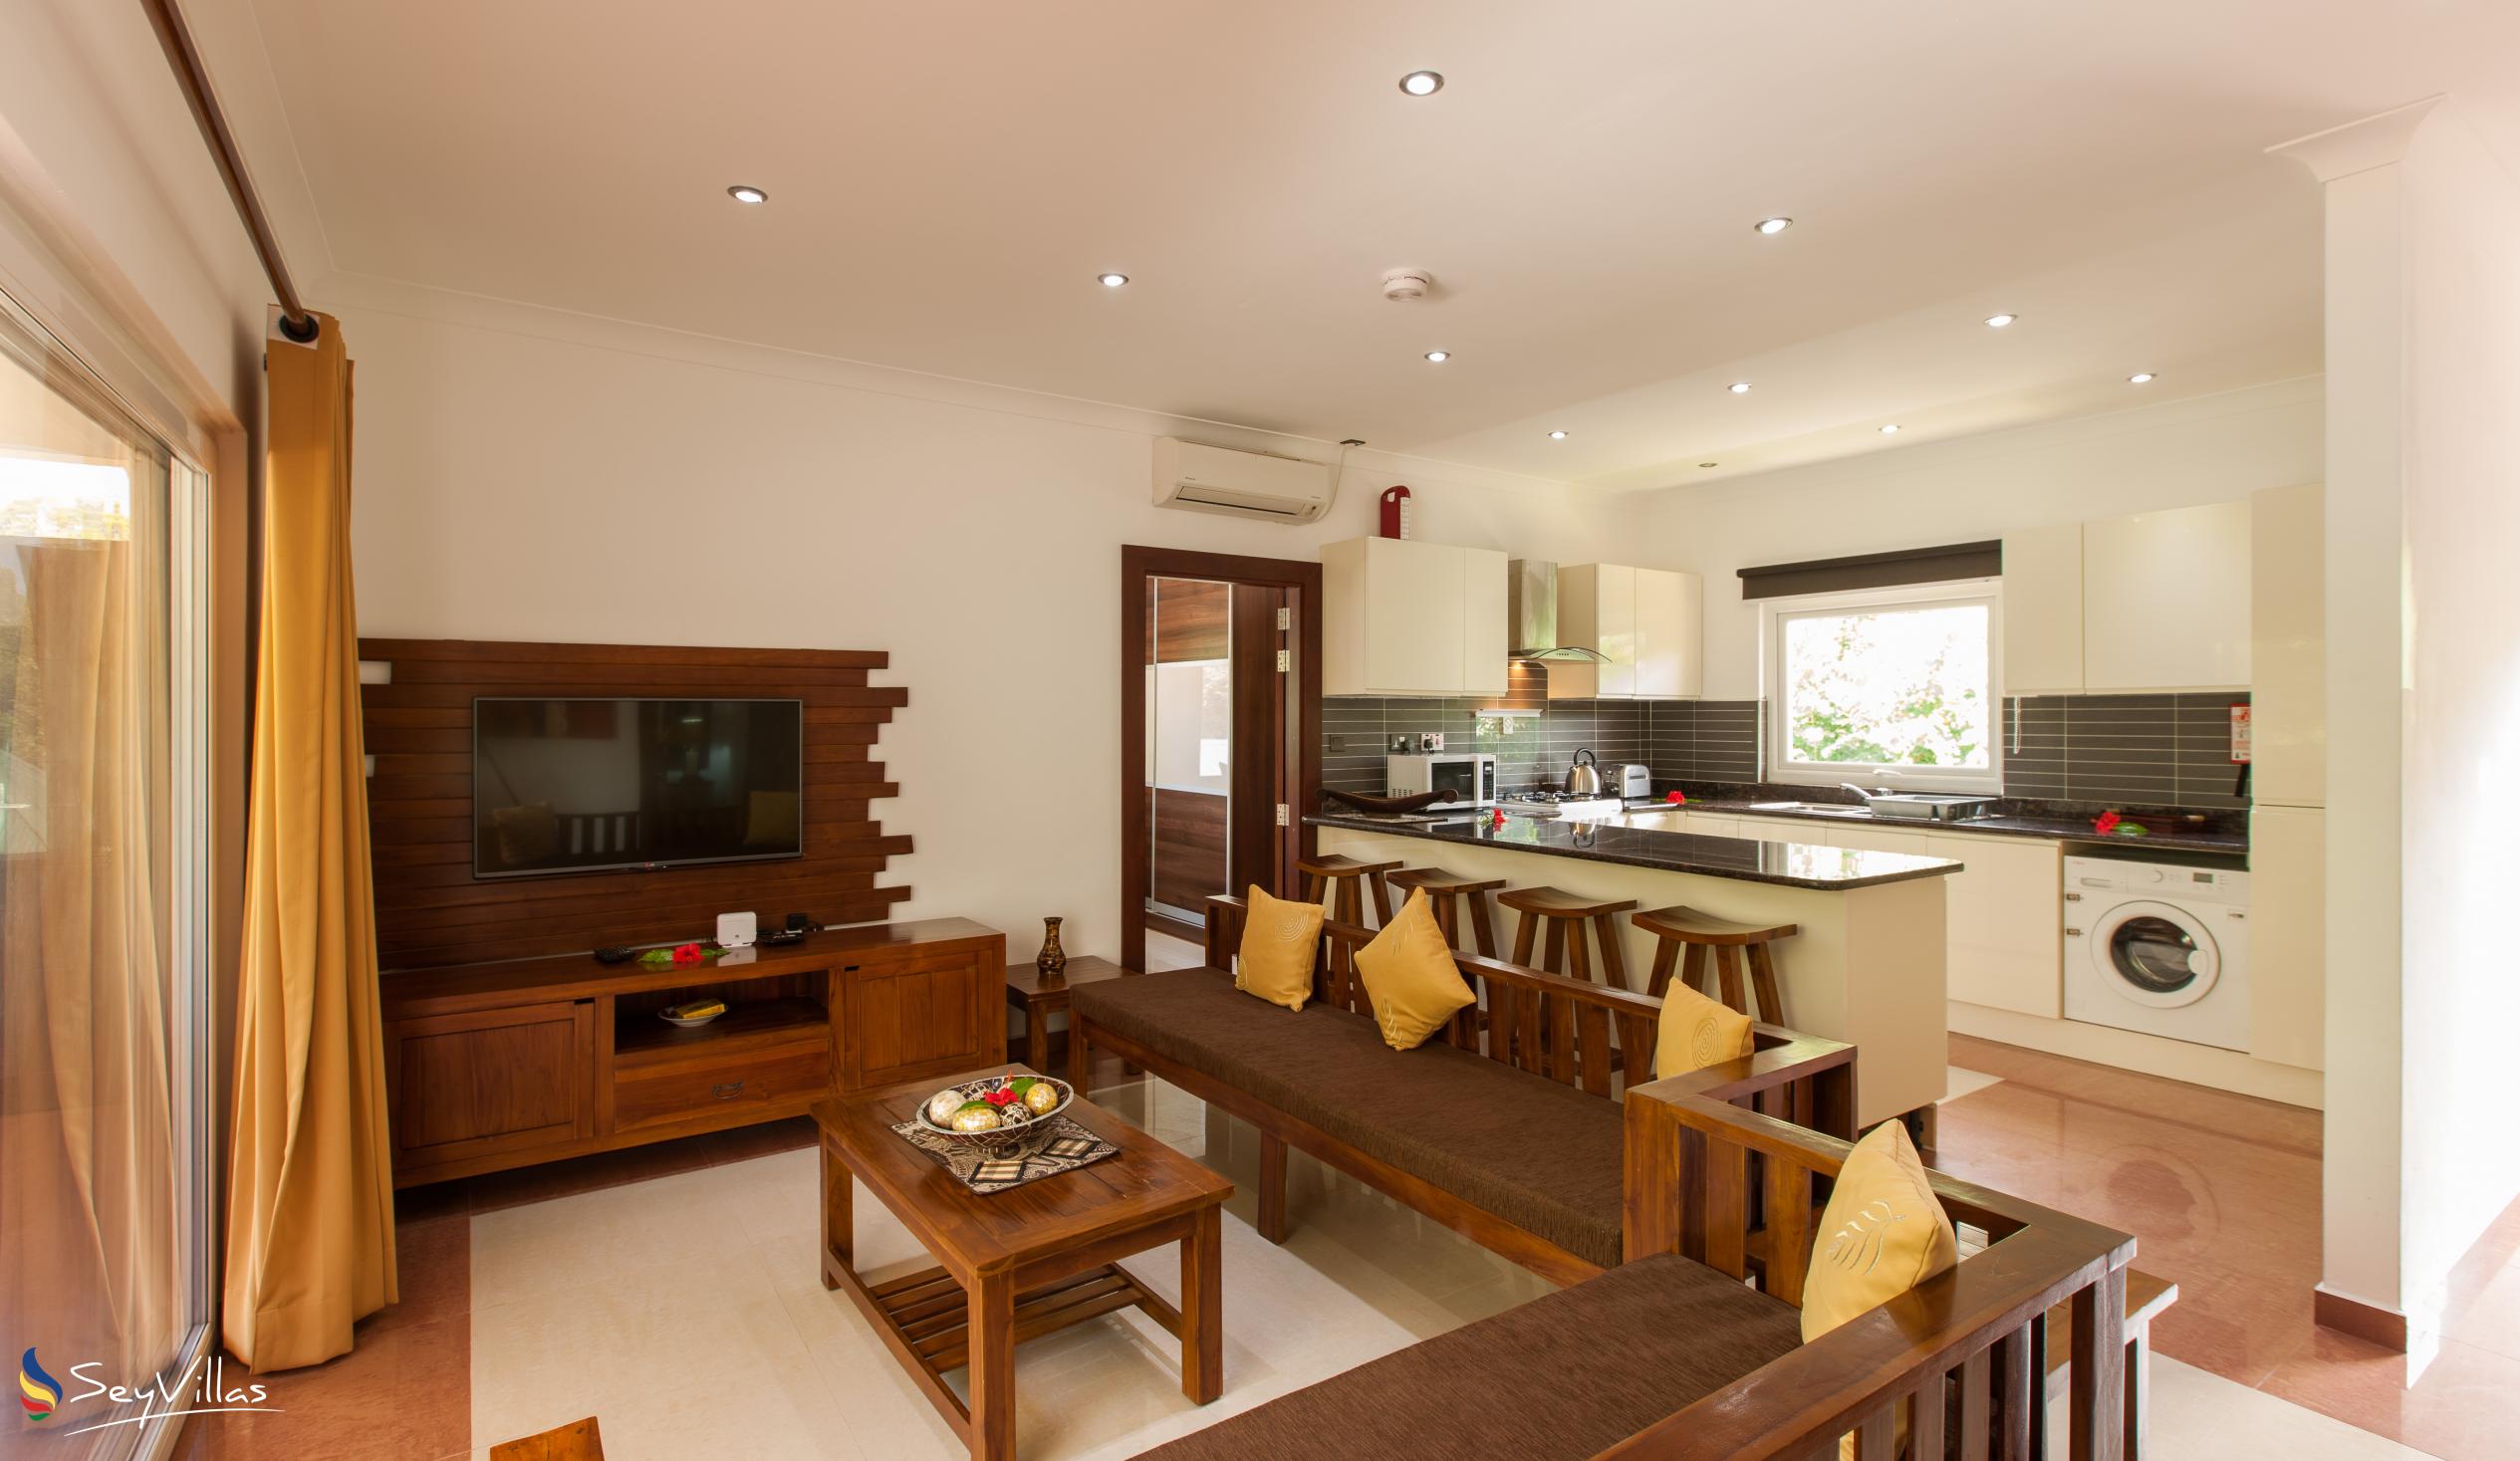 Foto 7: YASAD Luxury Beach Residence - Appartement 3 chambres - Praslin (Seychelles)